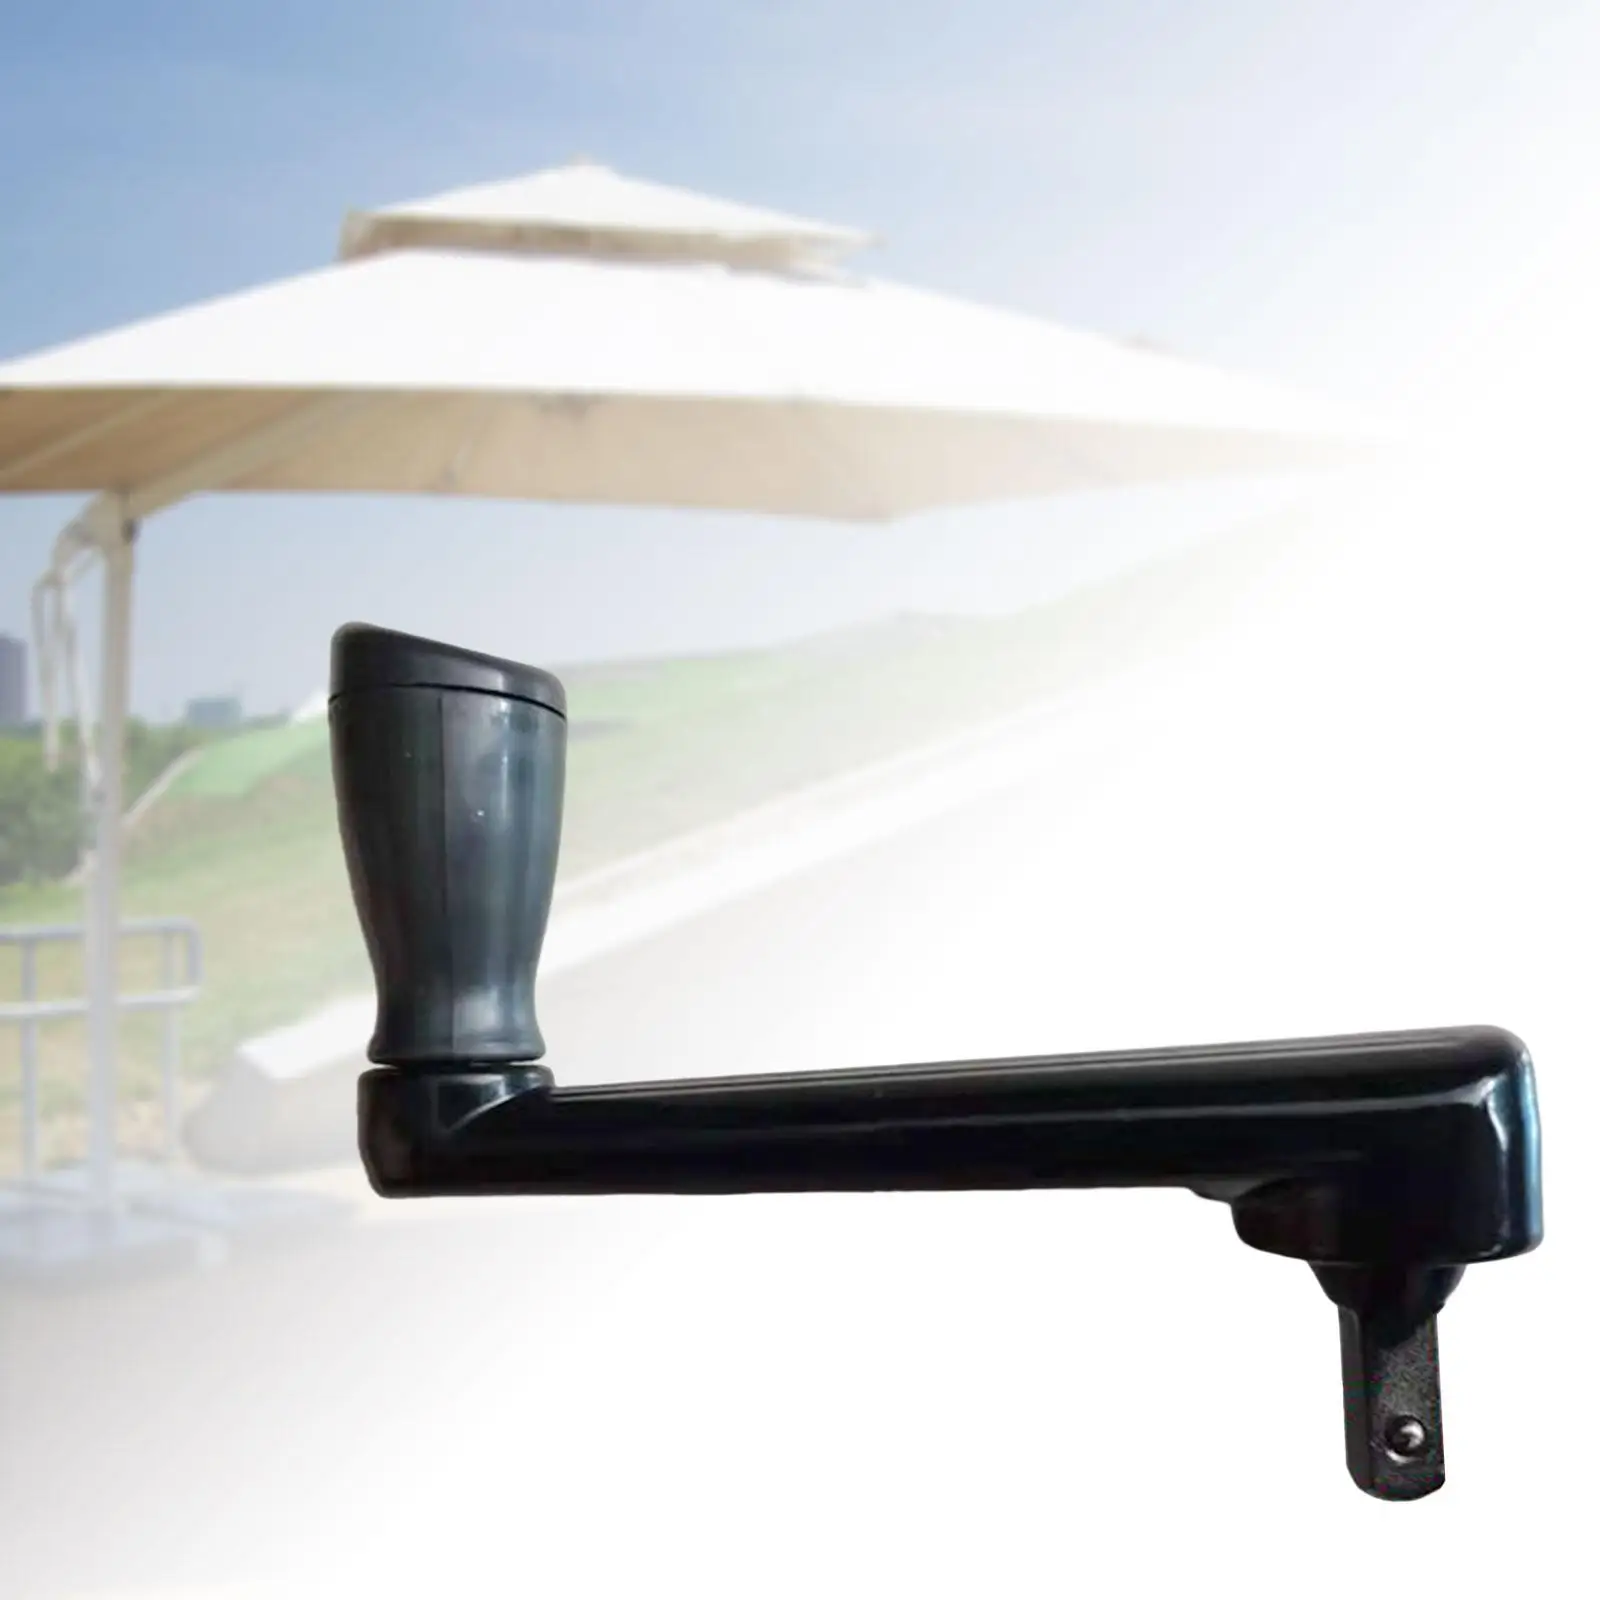 Outdoor Umbrella Rocker Handle Heavy Duty Parasol Adjustable Replace Umbrella Attachment for Courtyard Garden Balcony Yard